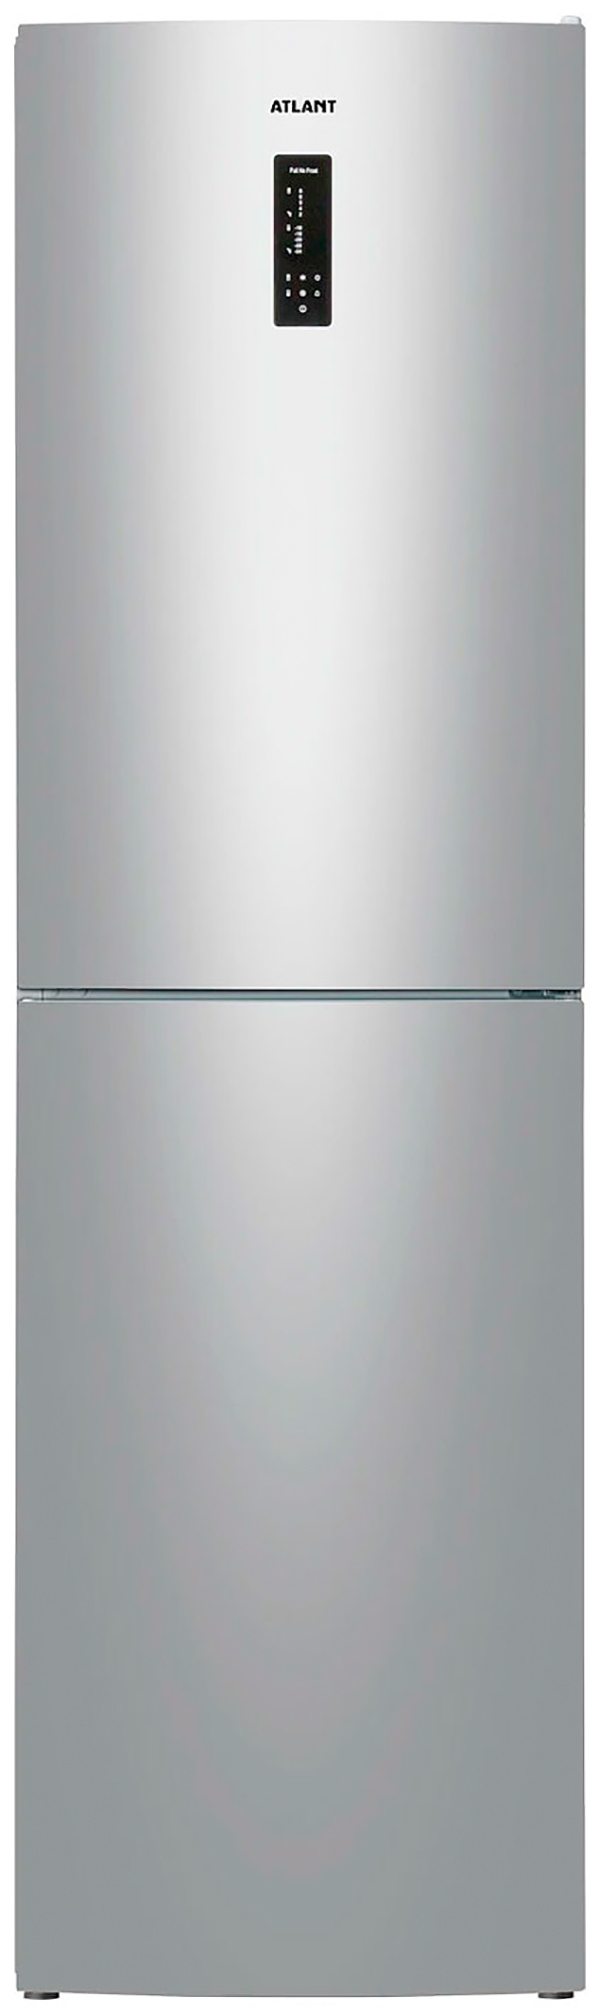 Холодильник ATLANT ХМ 4625-181 NL C серебристый морская магнитола mrh 301 zone control серебристый ободок marine rocket mrh301s